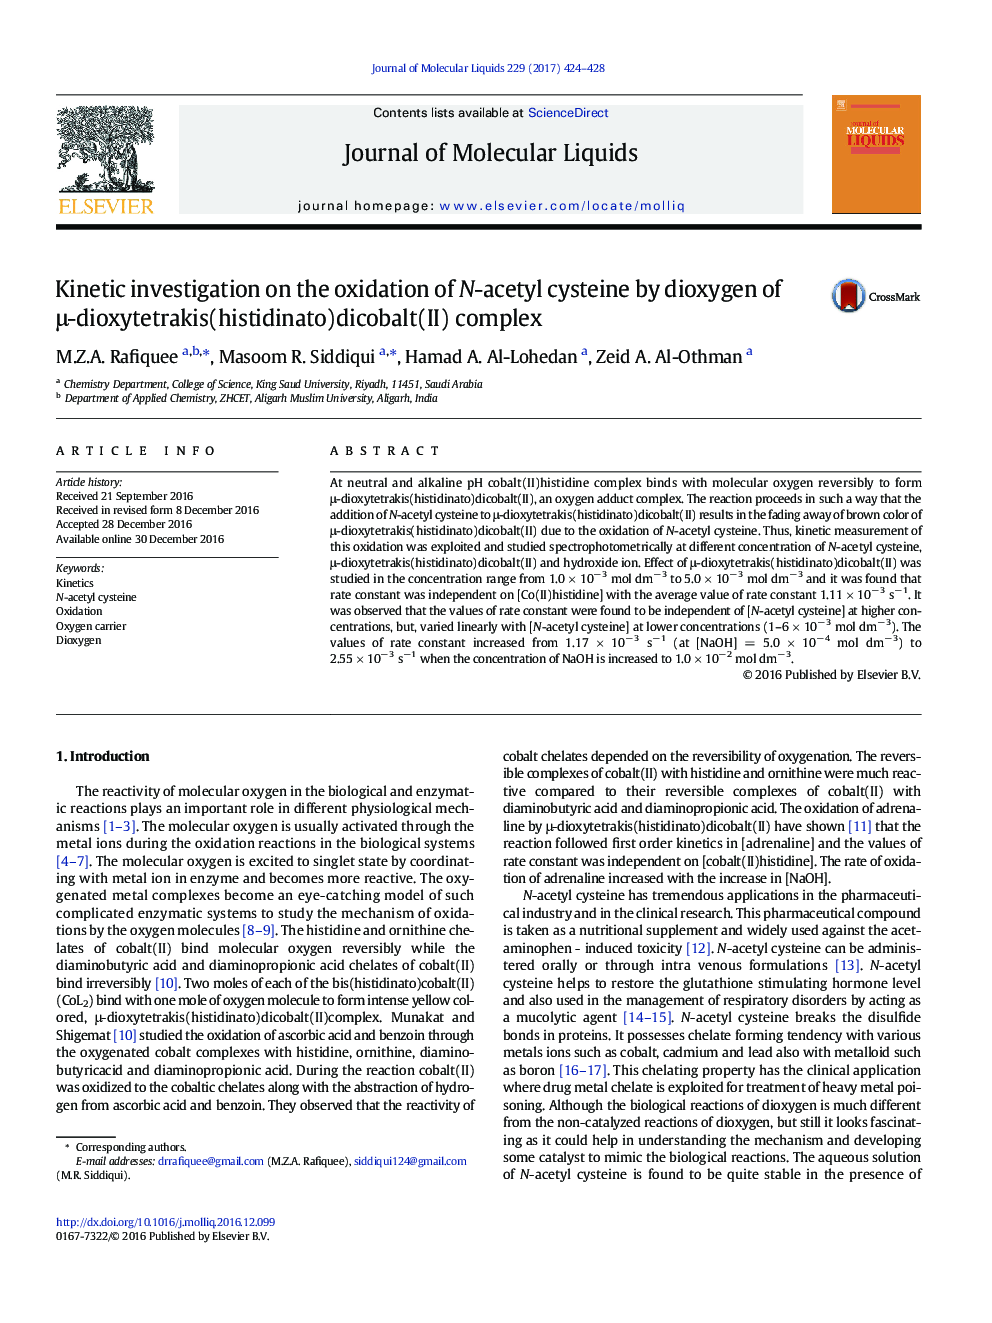 Kinetic investigation on the oxidation of N-acetyl cysteine by dioxygen of Î¼-dioxytetrakis(histidinato)dicobalt(II) complex